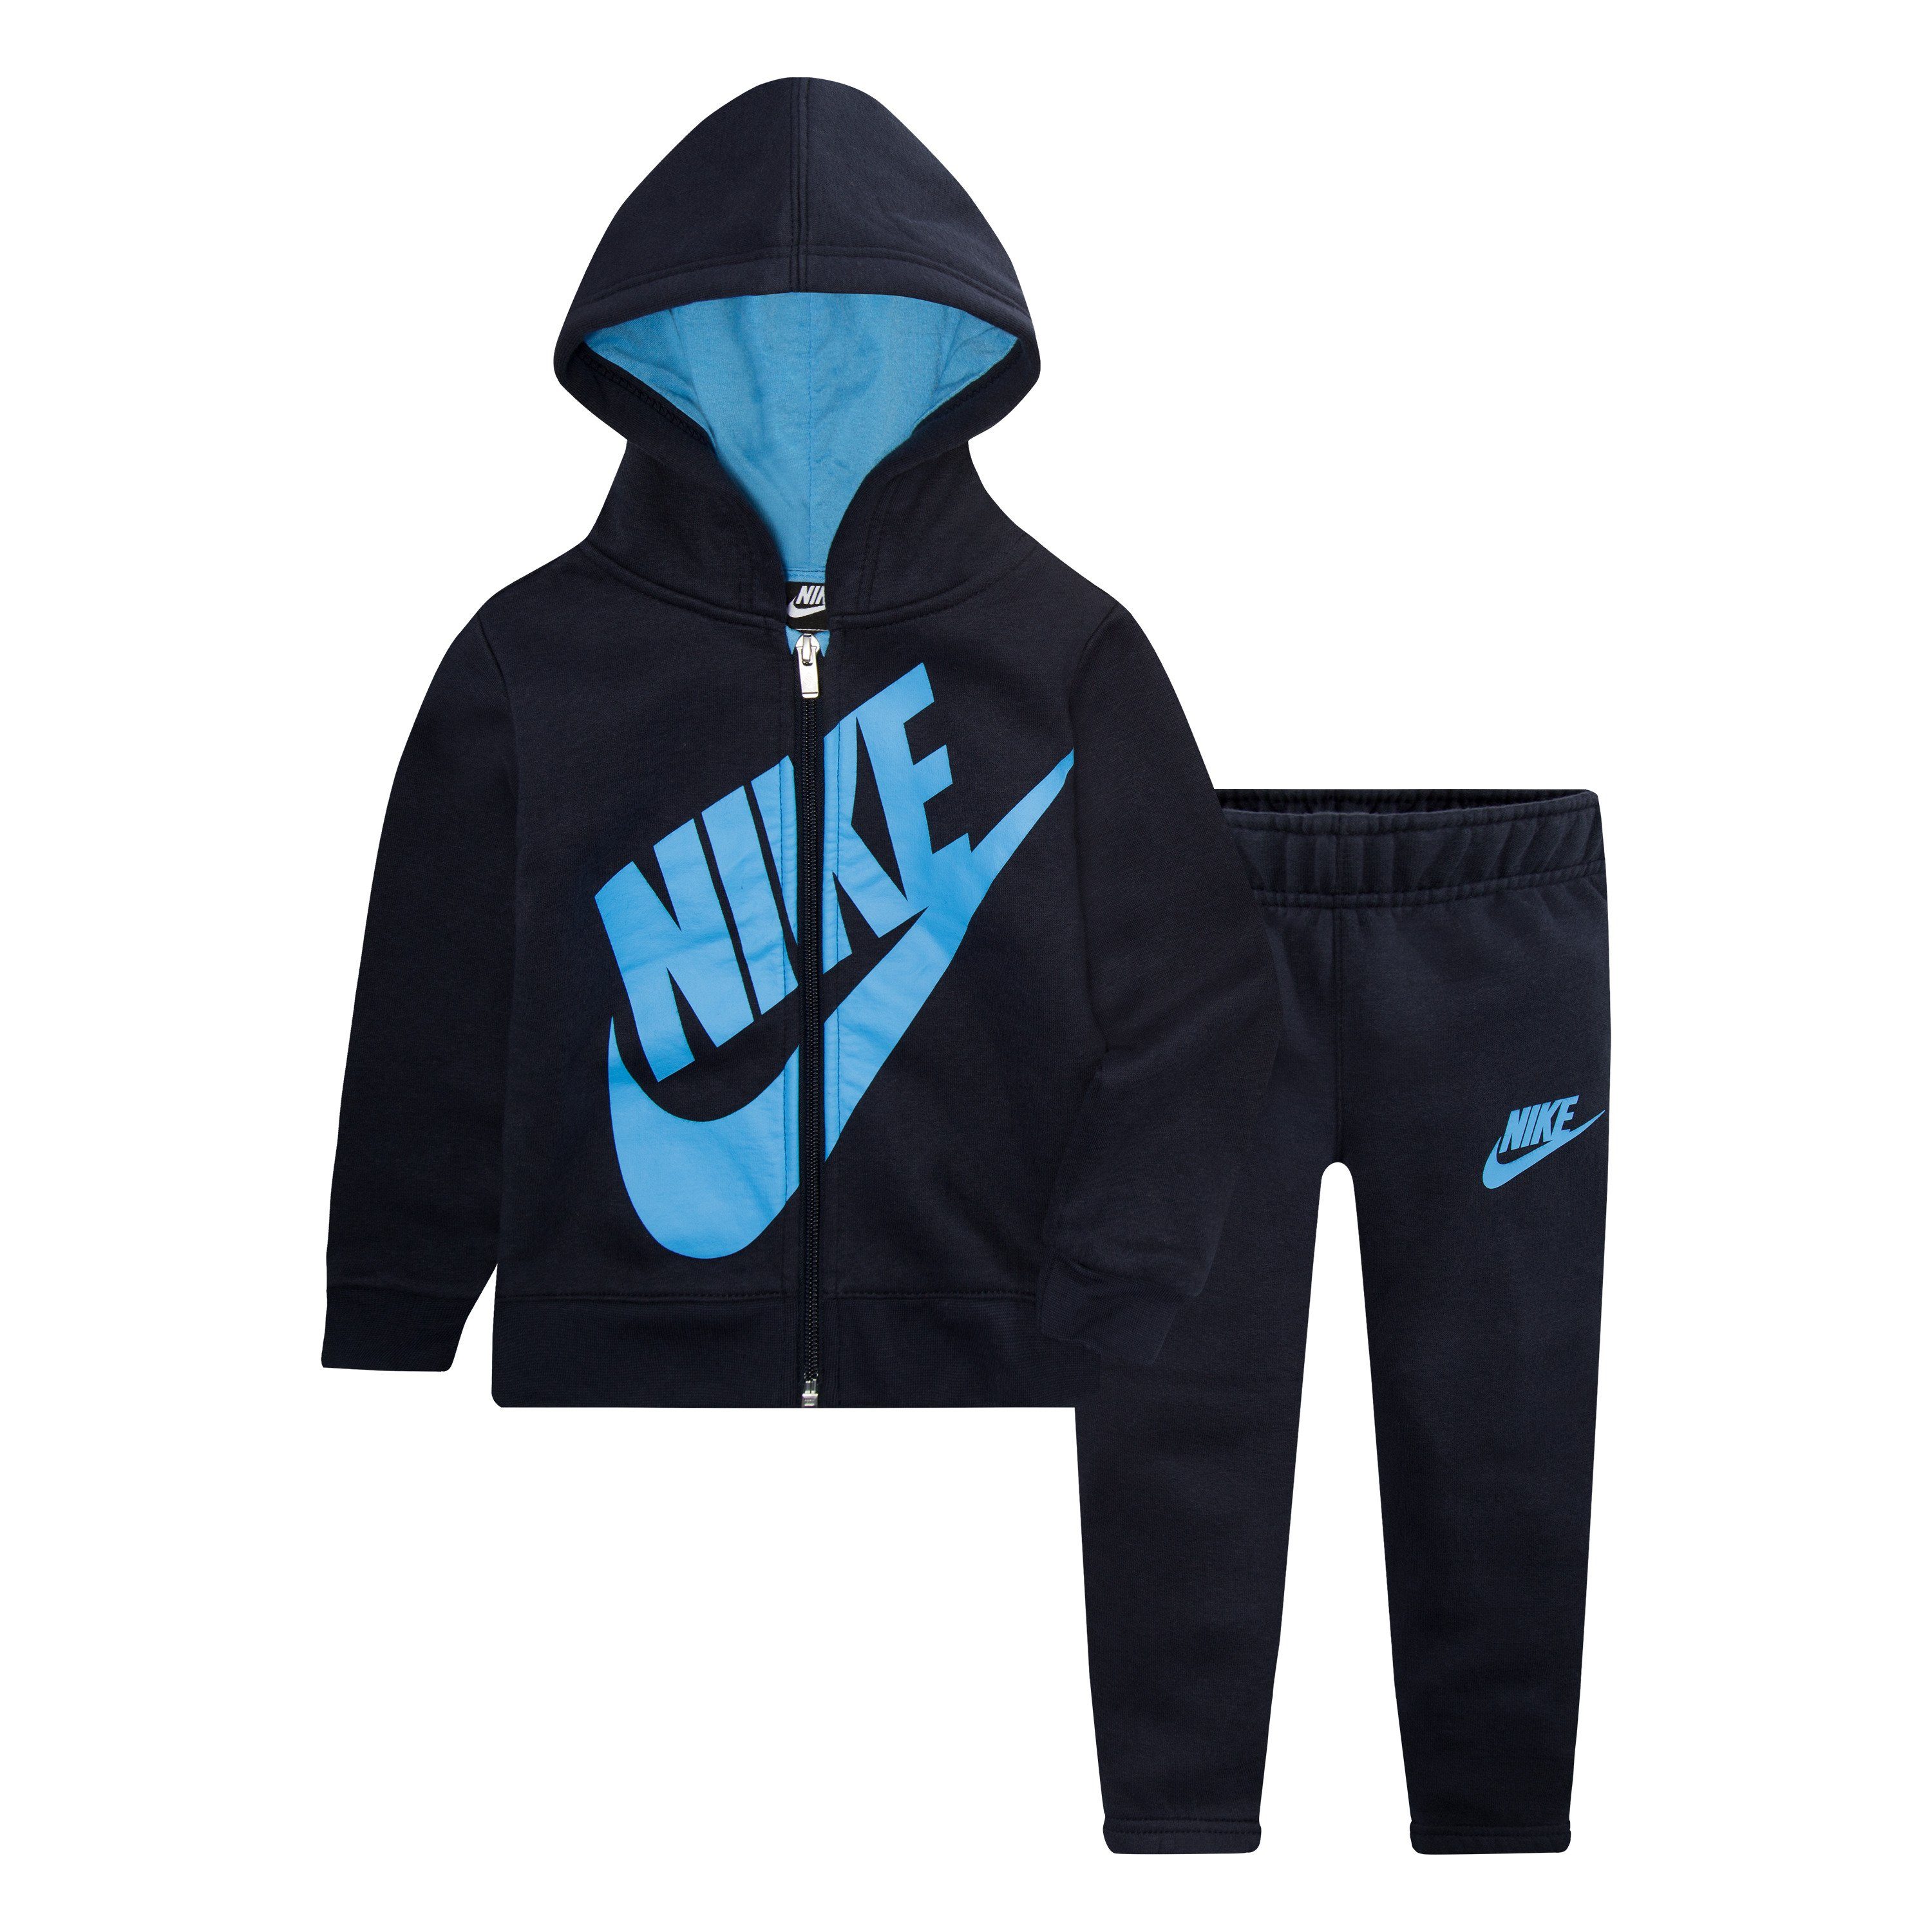 SE JOGG SUEDED NKB FUTURA Jogginganzug FLEECE marine-blau Nike Sportswear